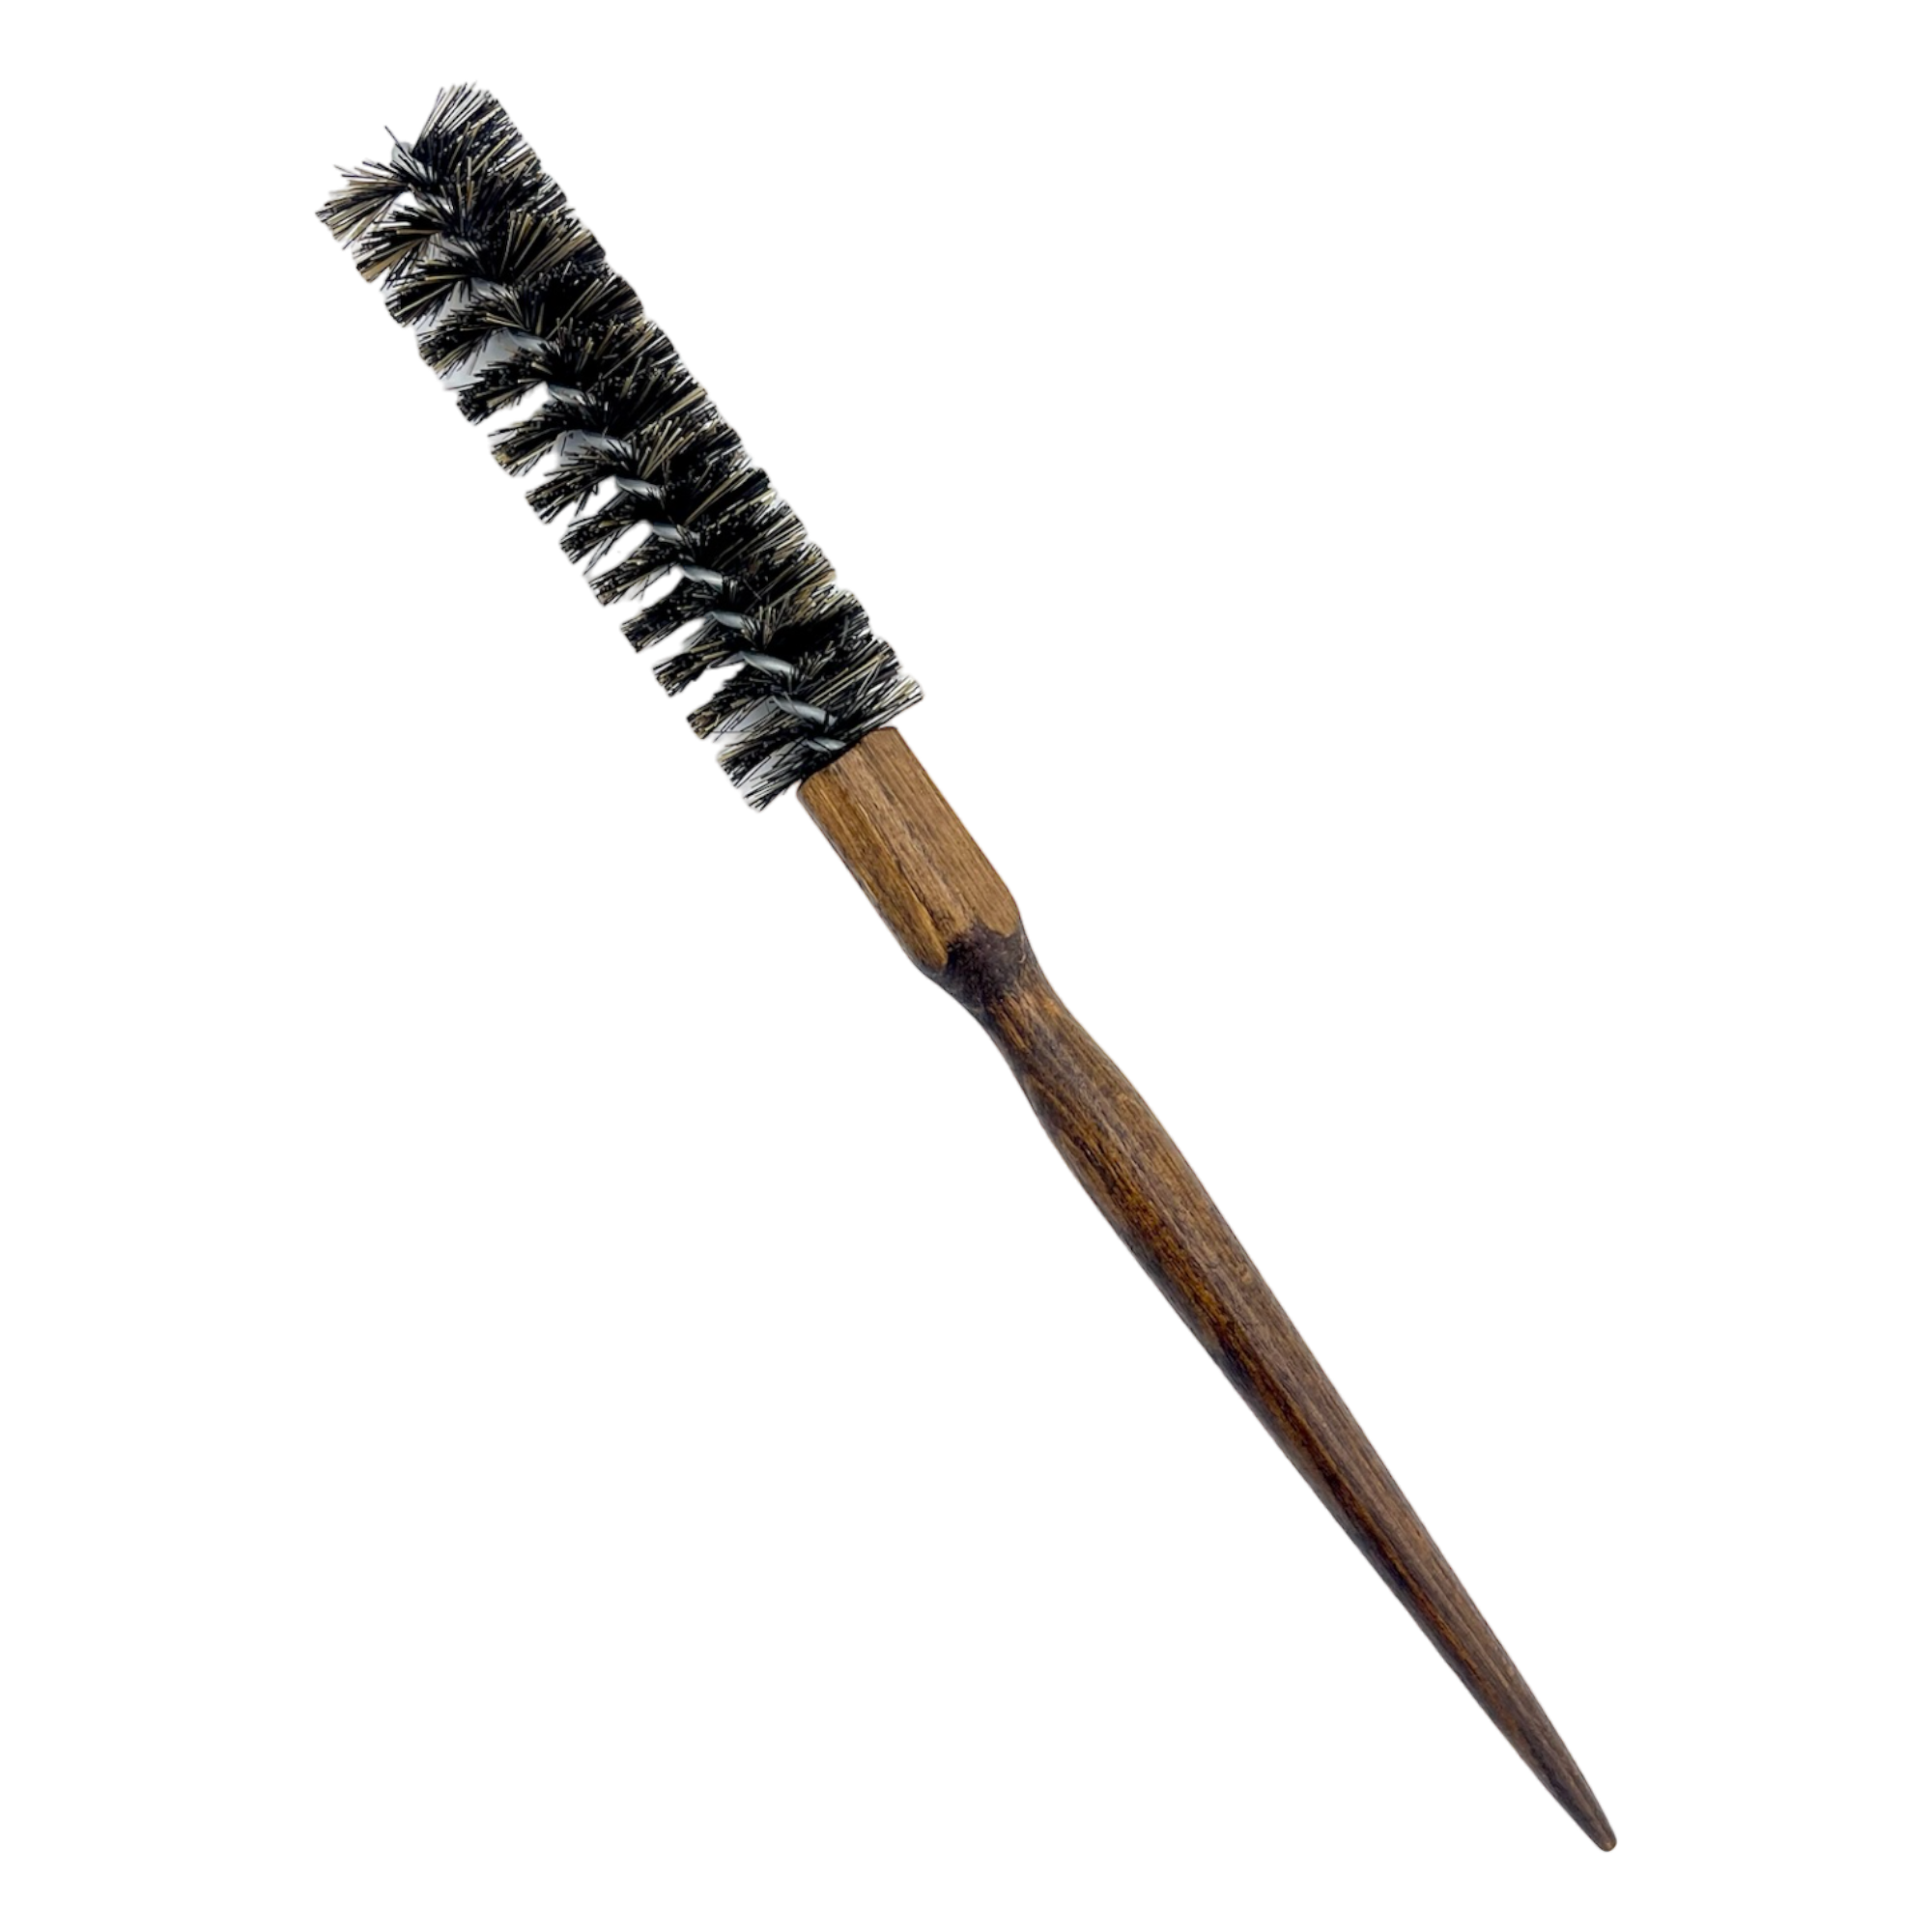 Dural Walnut curling hair brush with boar bristles